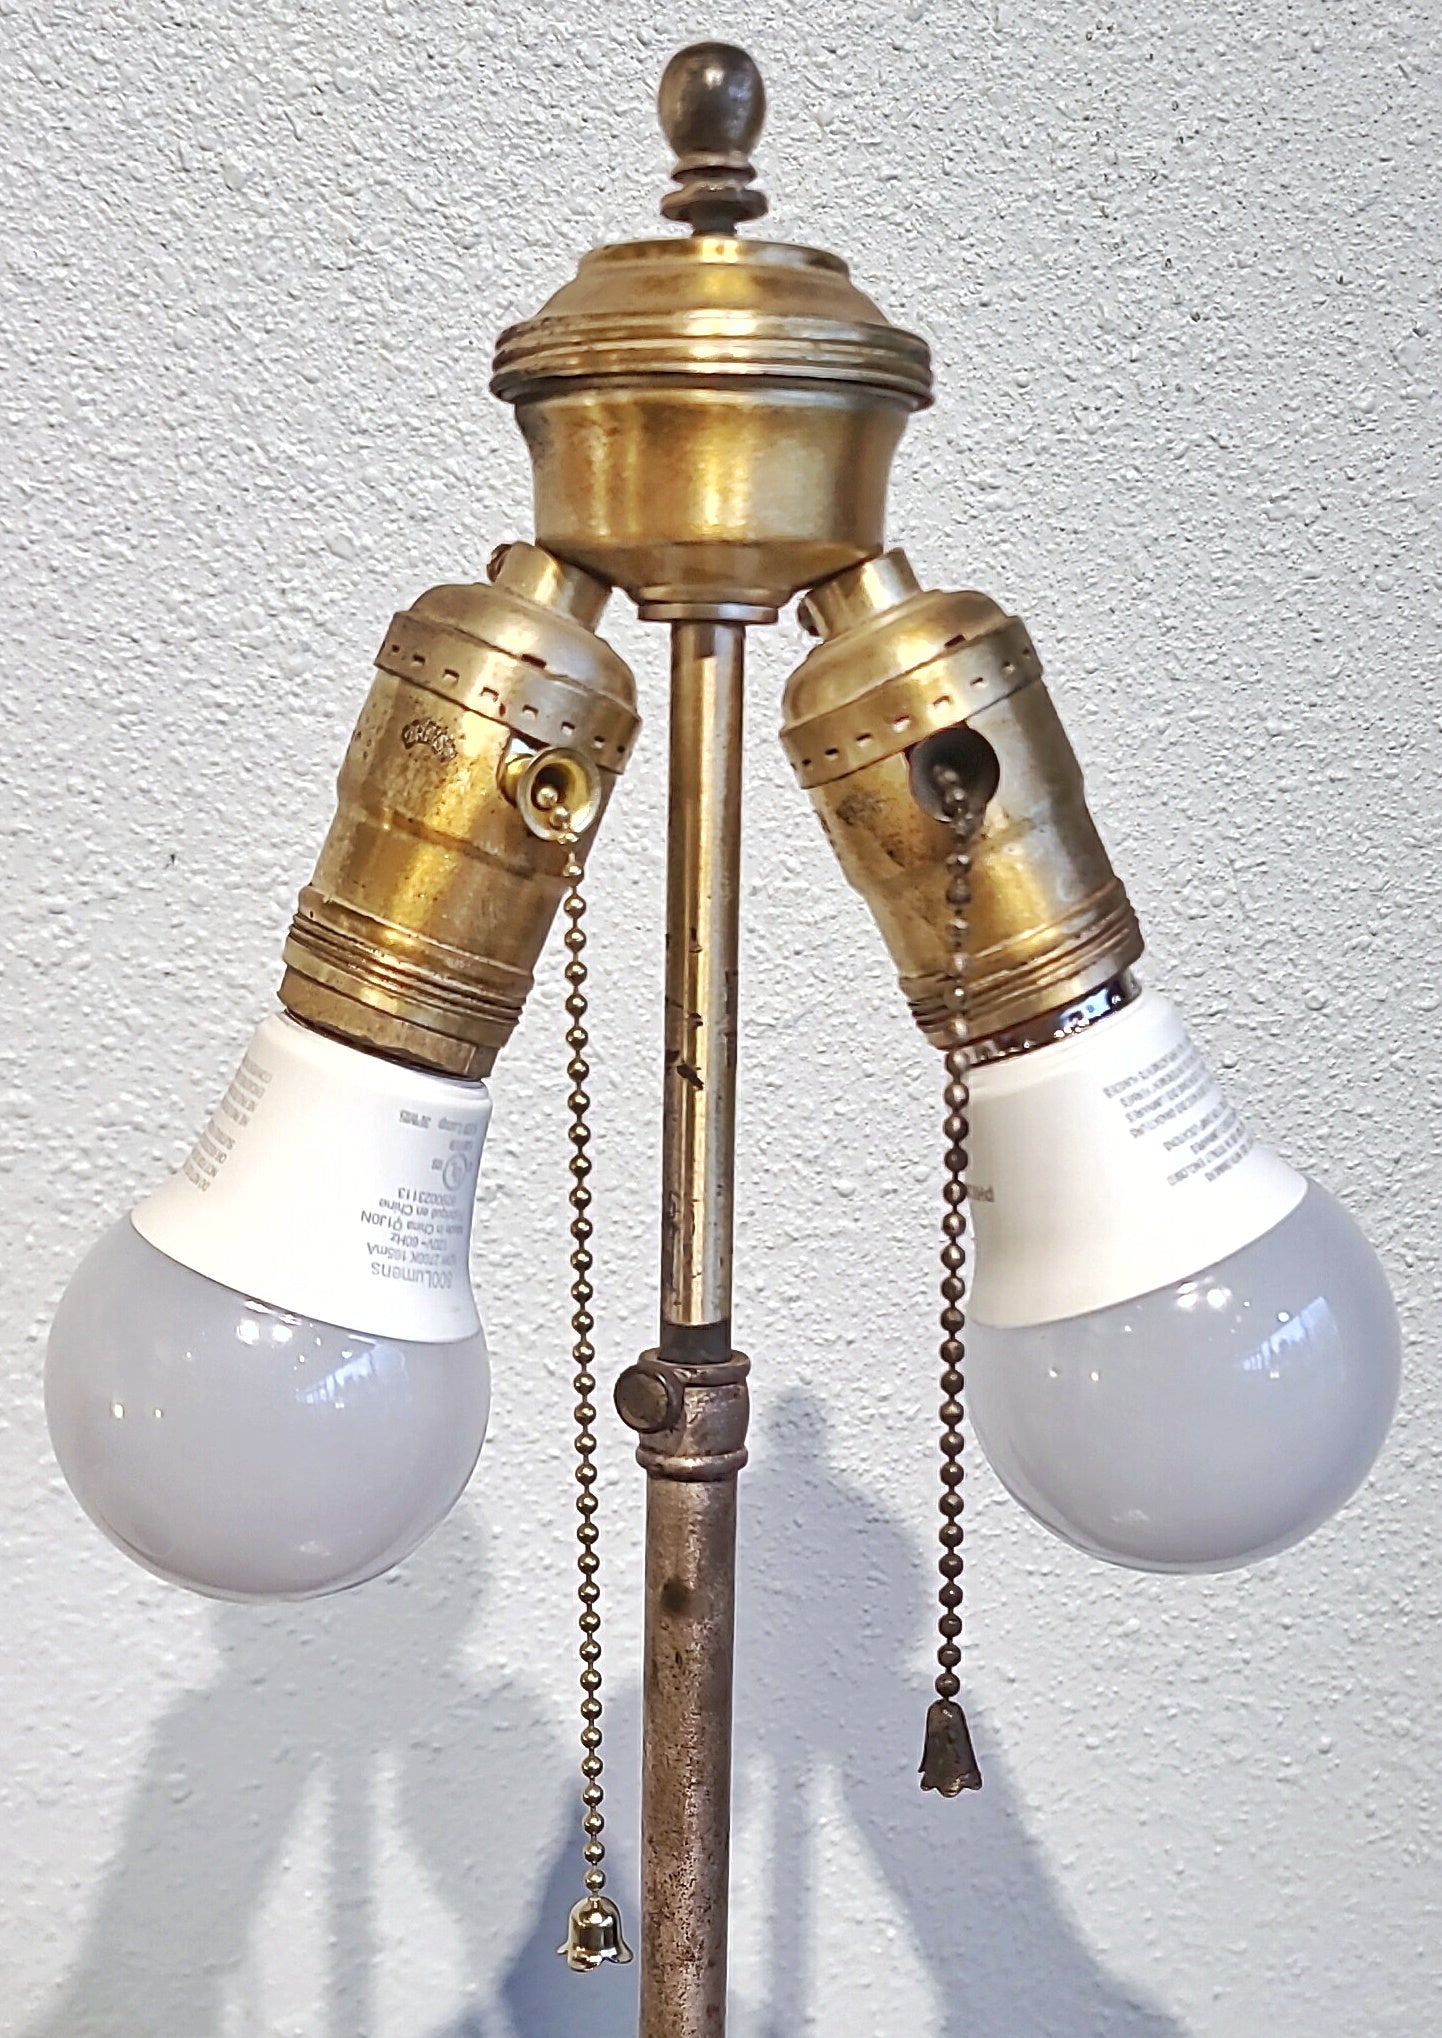 TALL ‘ARGENTA’ TABLE LAMP BY WILHELM KÅGE FOR GUSTAVSBERG (SWEDEN)